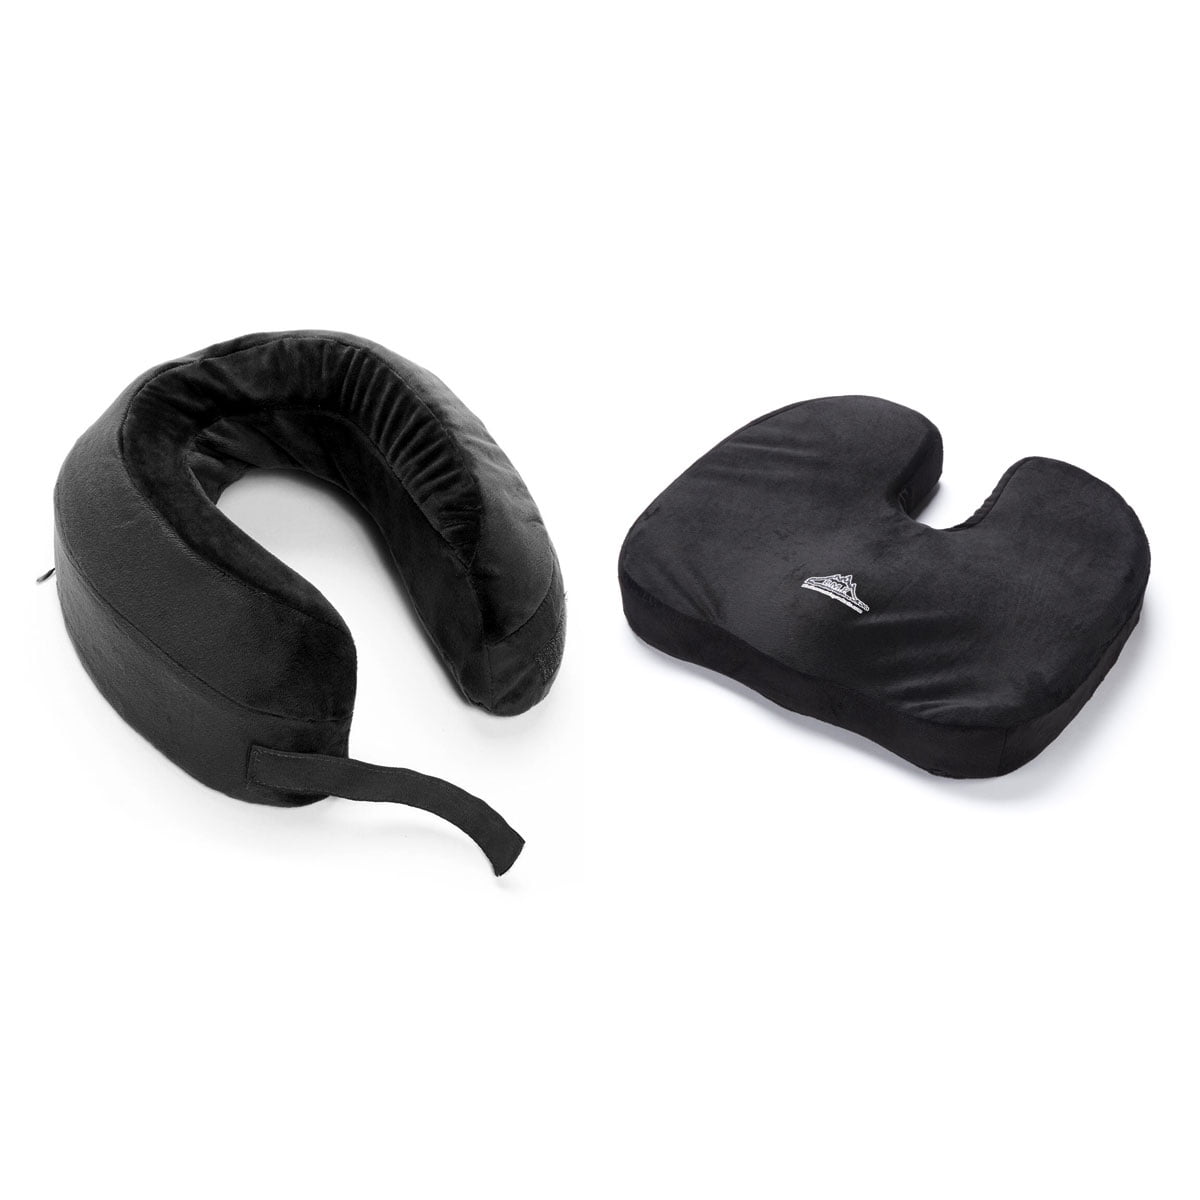 Sleepavo Black Memory Foam Seat Cushion - A Comprehensive Review 